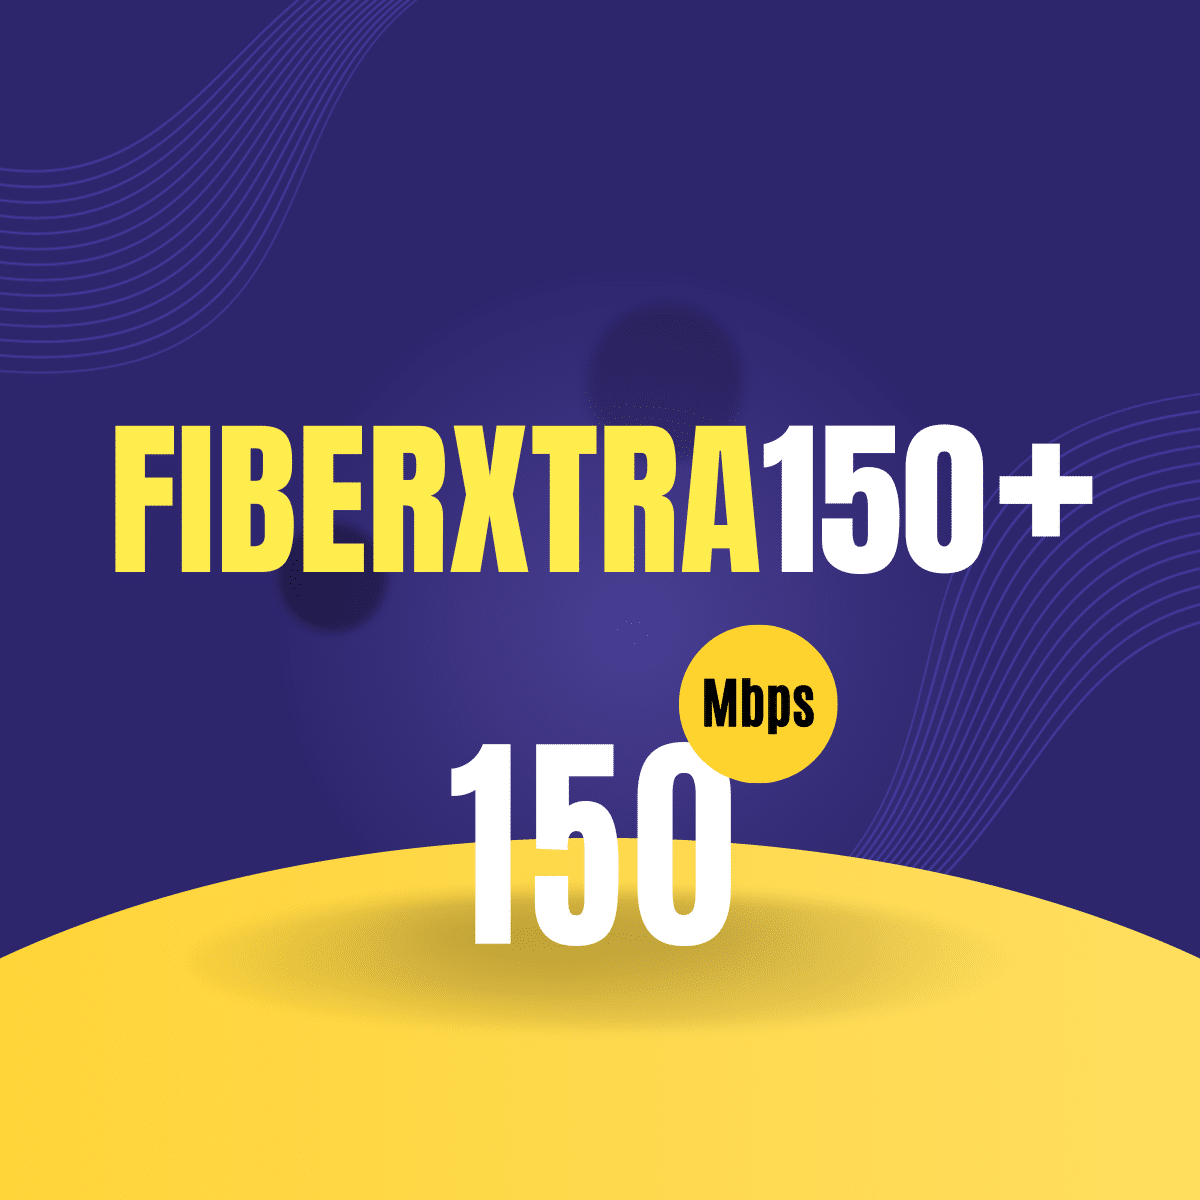 Fiberxtra 150, fiberxtra150+